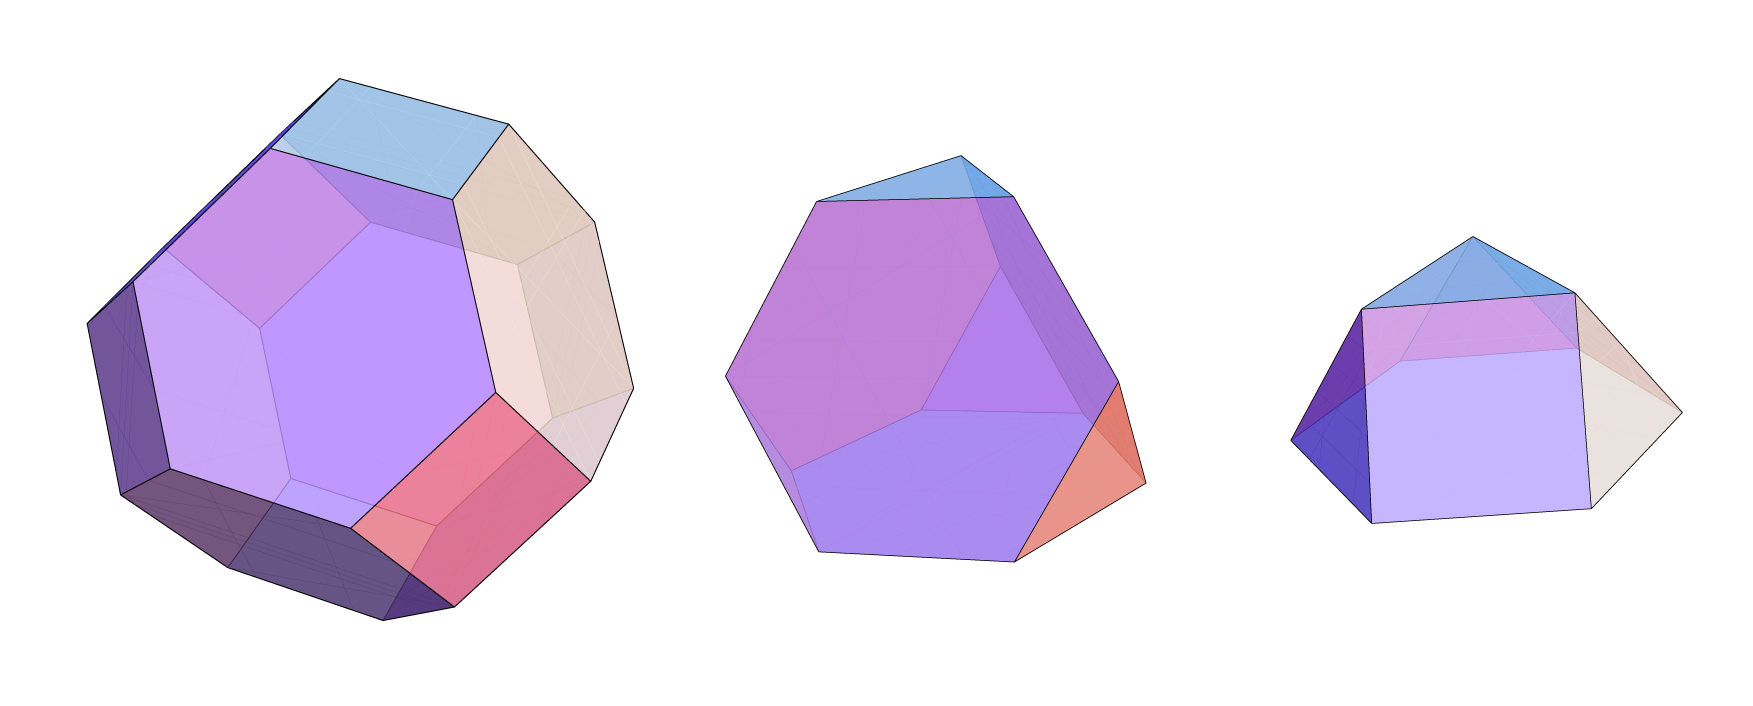 Oktaederstumpf, Tetraederstumpf, 3-Kuppel